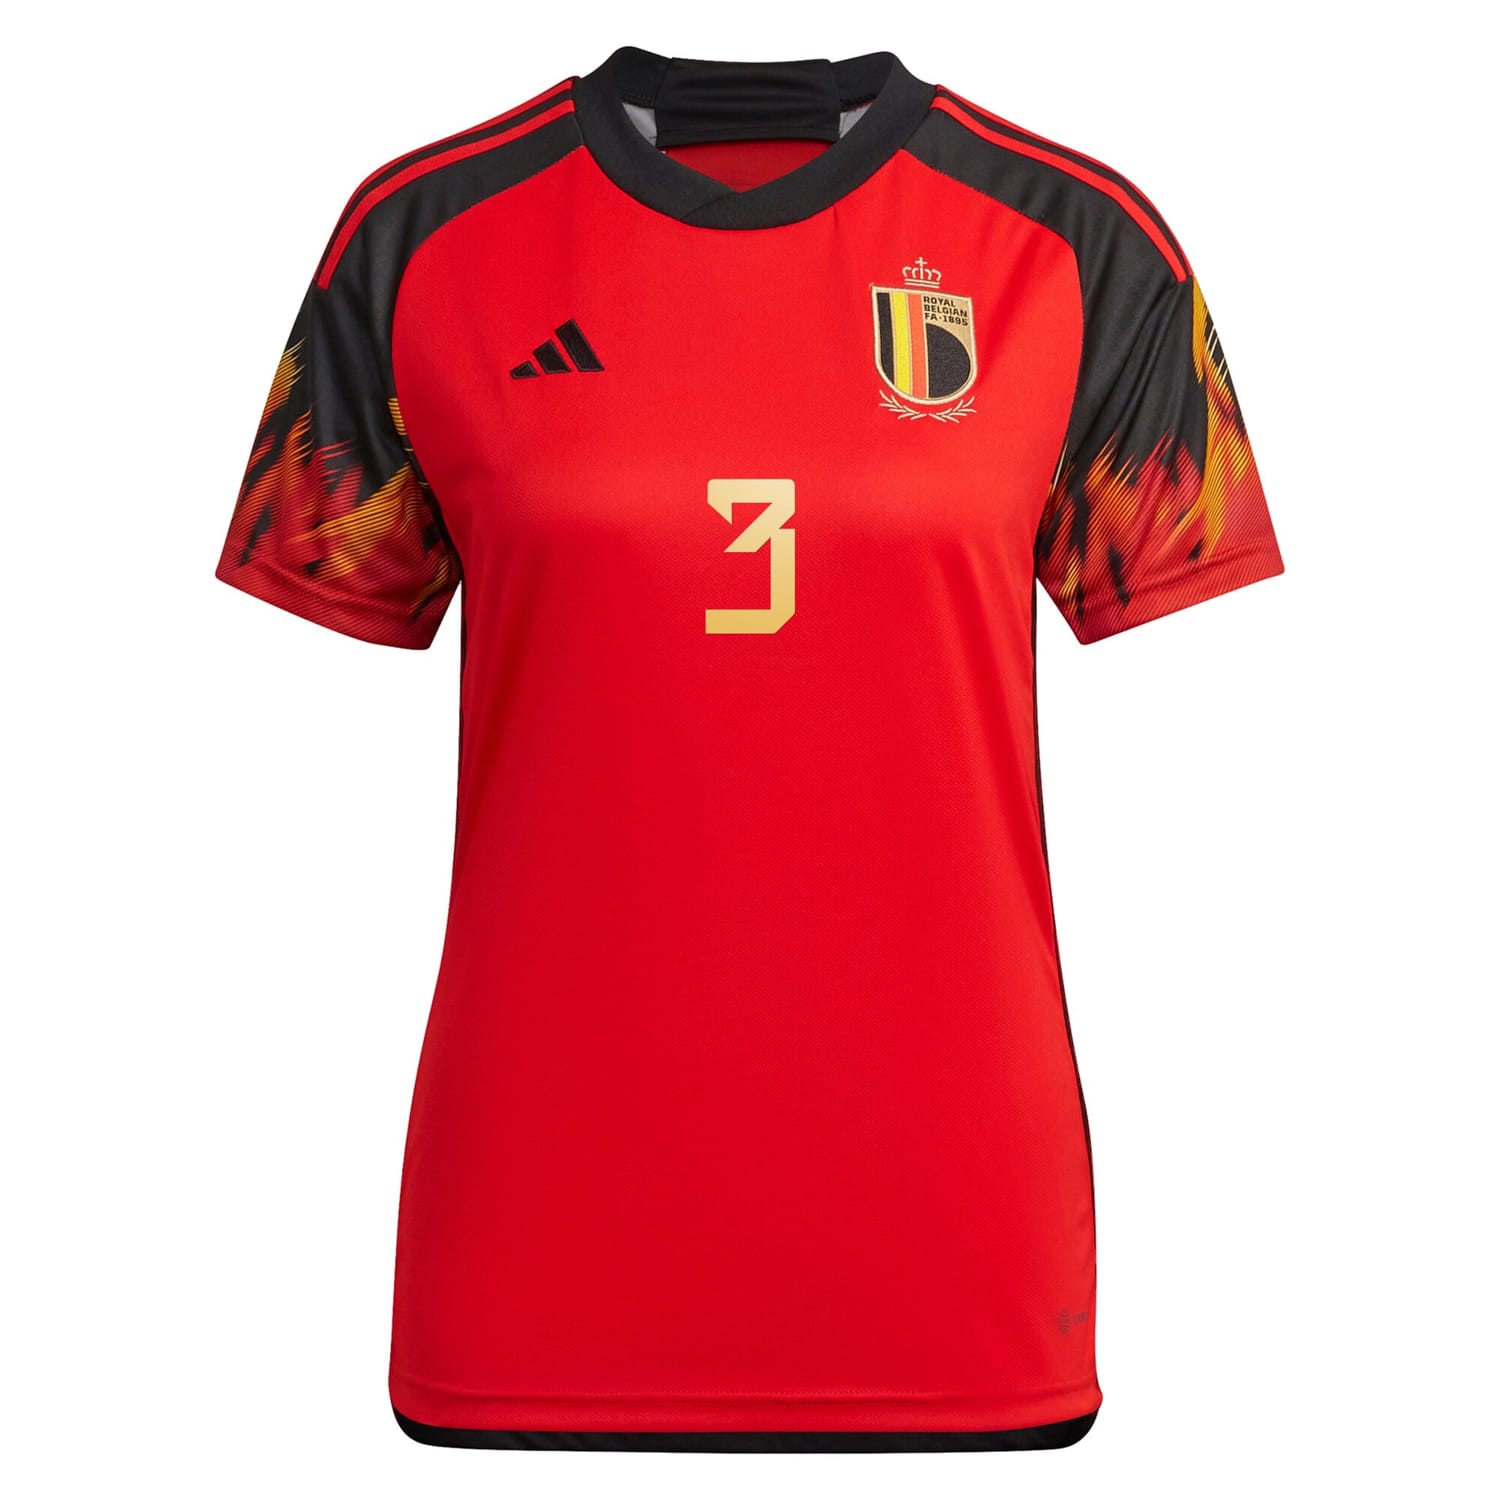 Belgium National Team Home Jersey Shirt 2022 player Ella Van Kerkhoven 3 printing for Women